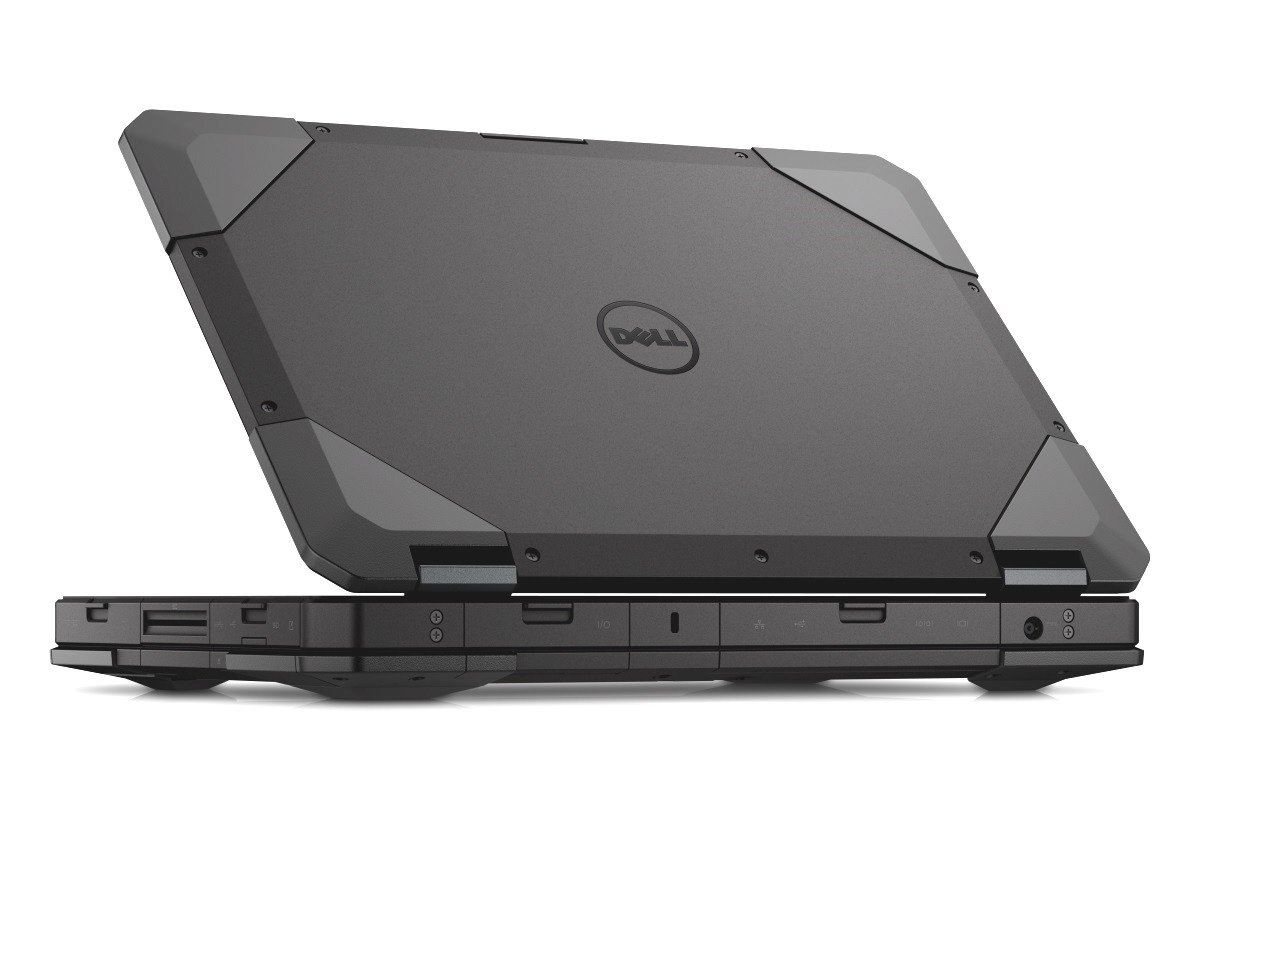 Dell Latitude 14 5000 5414 Rugged Outdoor Business Laptop Workstation PC (Intel Core i5-6300U, 128GB SSD, 8GB Ram, Backlit Keyboard, WiFi, Camera) Win 10 Pro (Renewed)